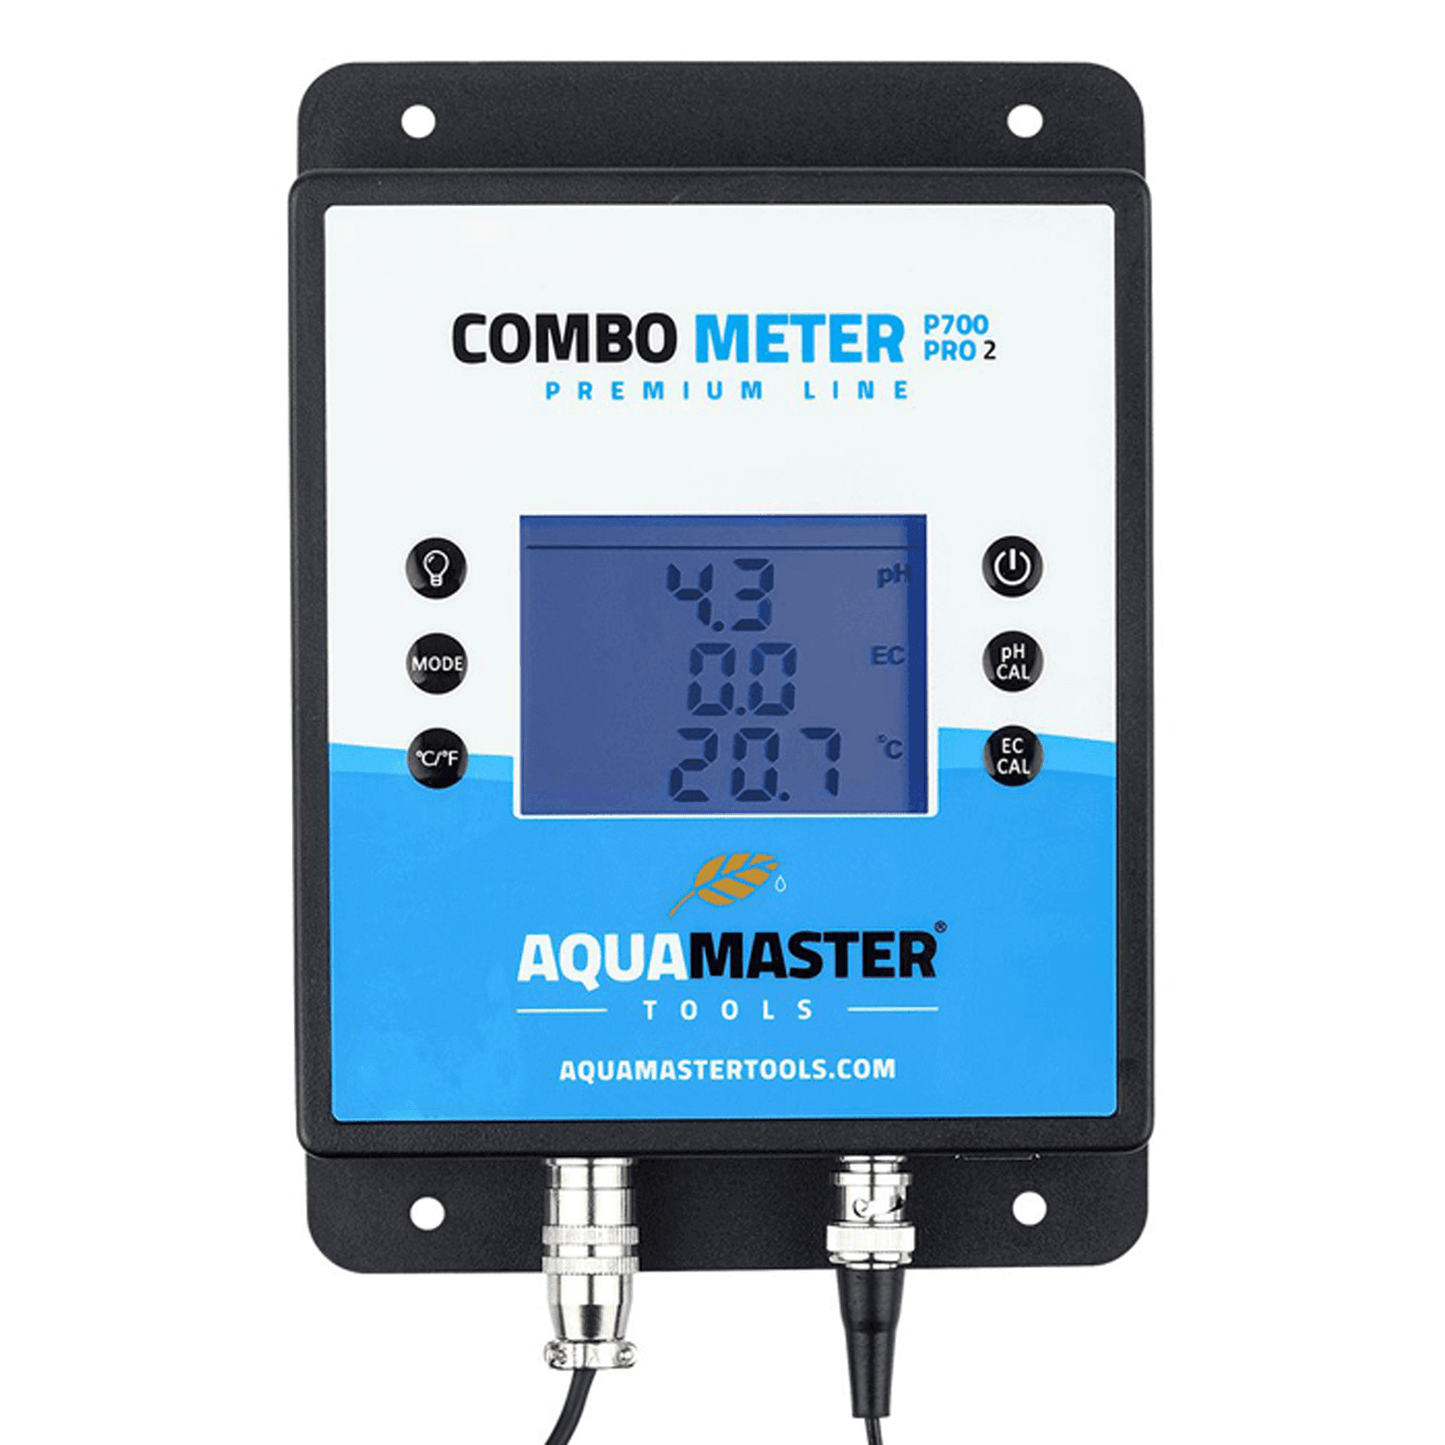 Aqua Master P700 Pro 2 Combo Meter AMT1020.2 Planting & Watering